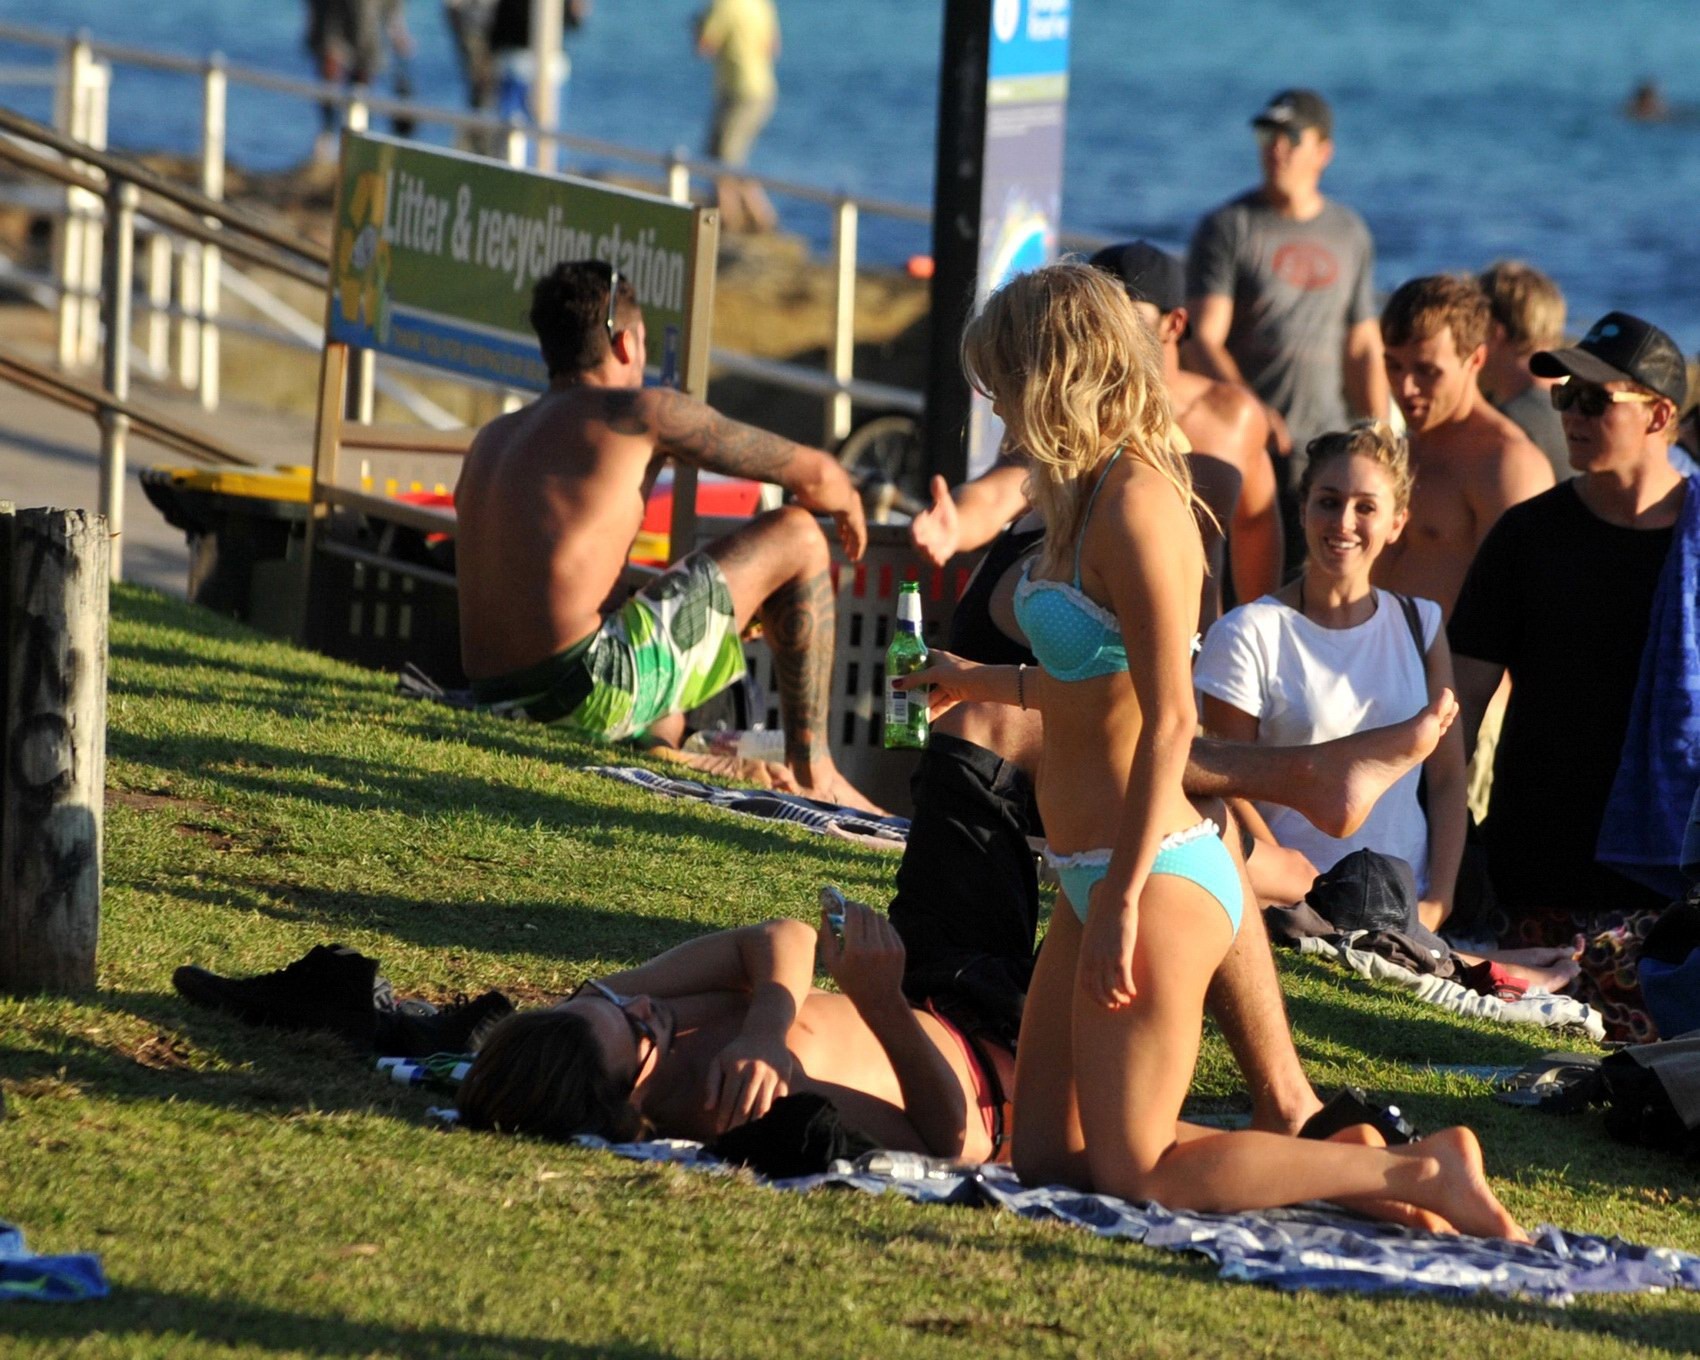 Samara Weaving in bikini petting with her boyfriend on Bondy Beach in Australia #75233697